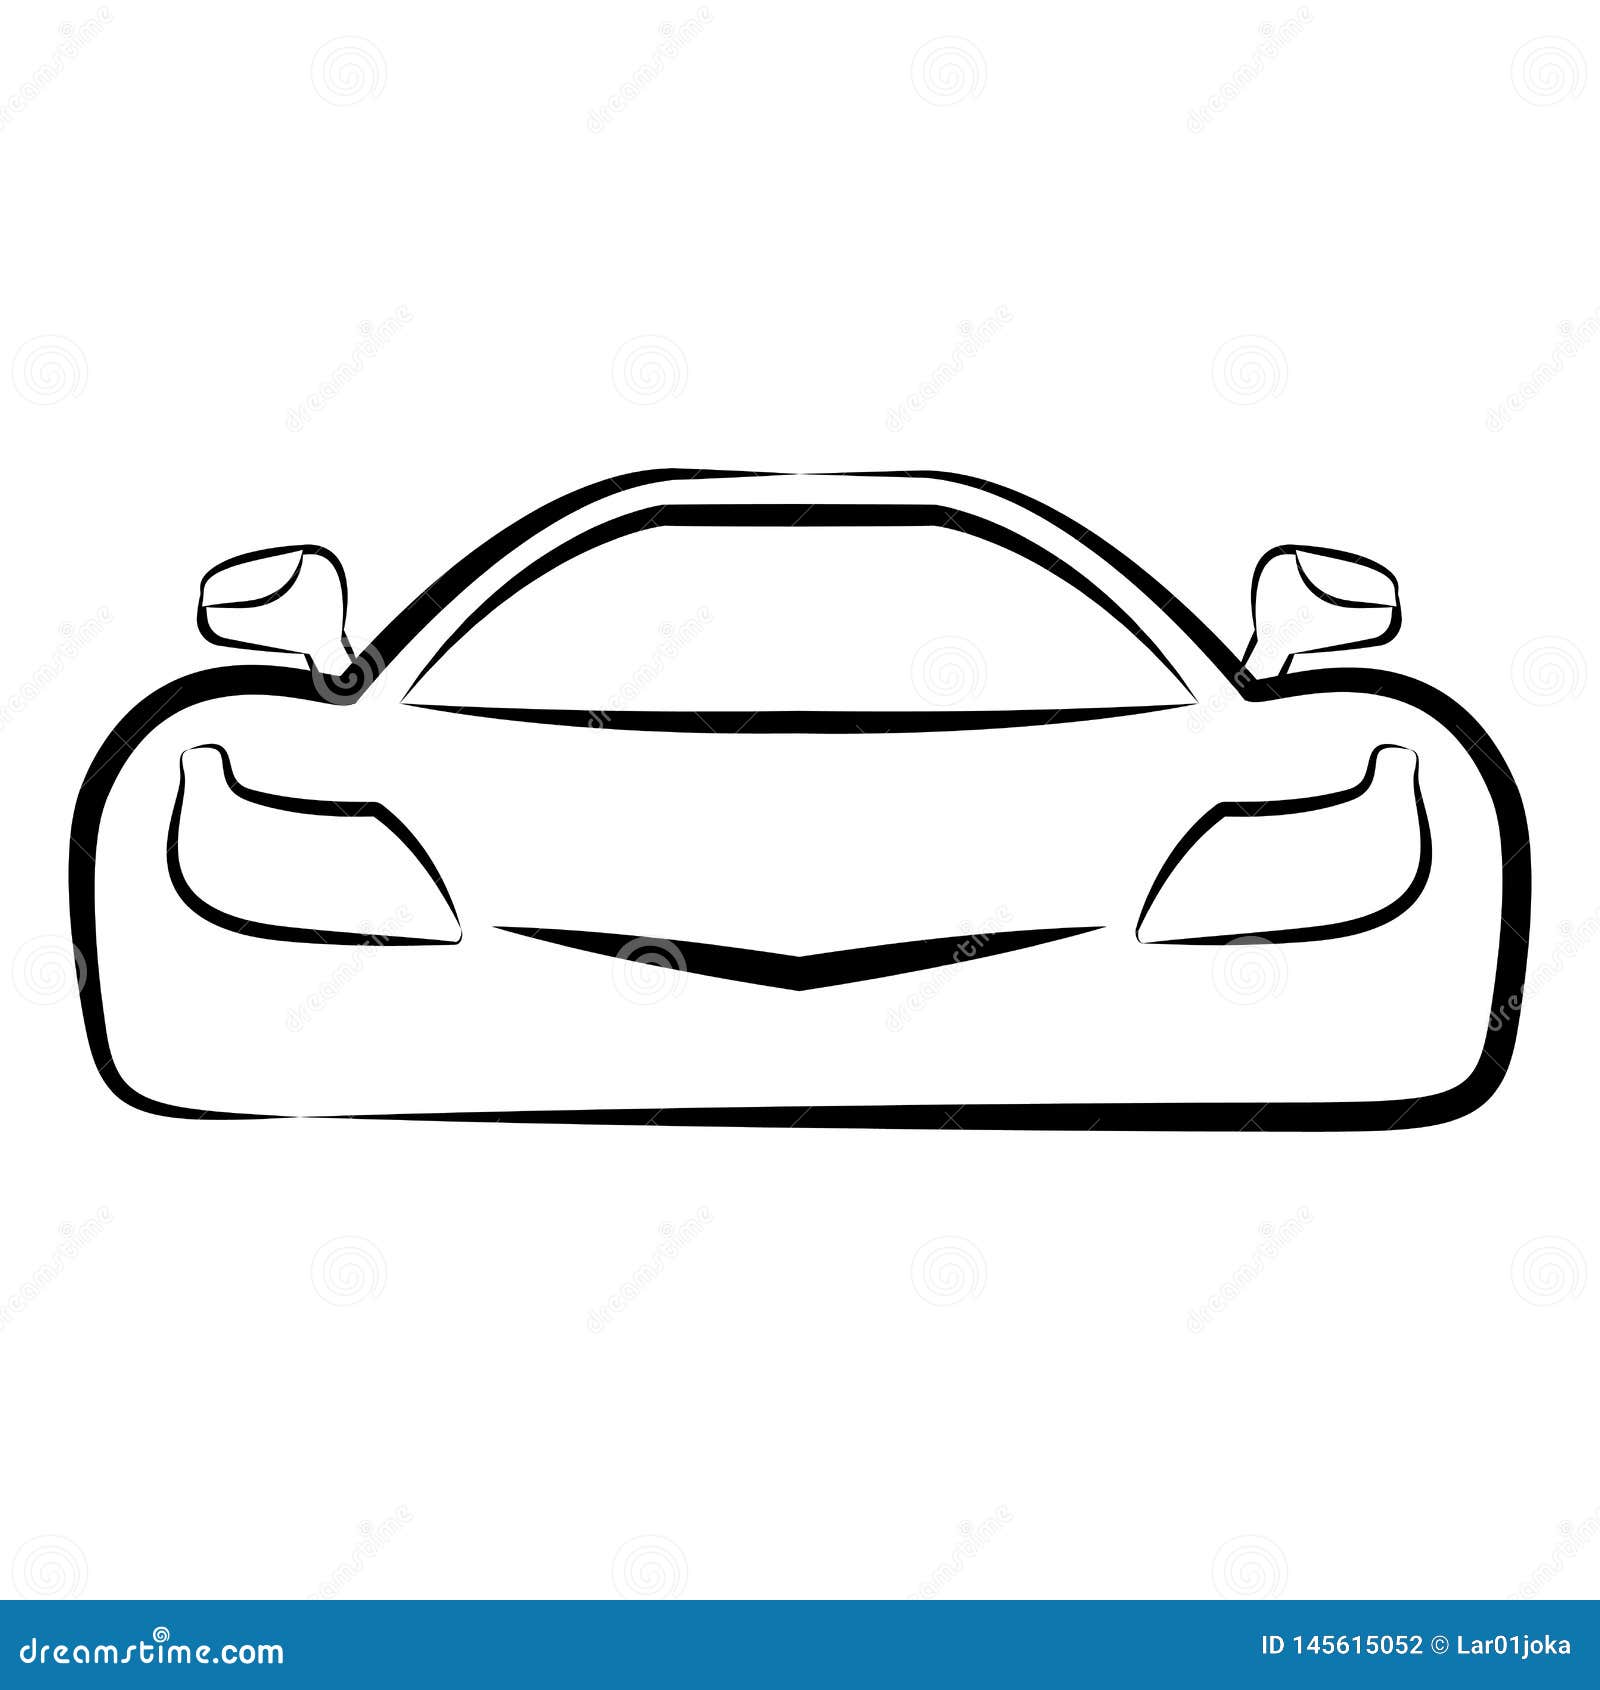 Premium Vector | Retro car continuous line one drawing vector illustration  simple line illustration